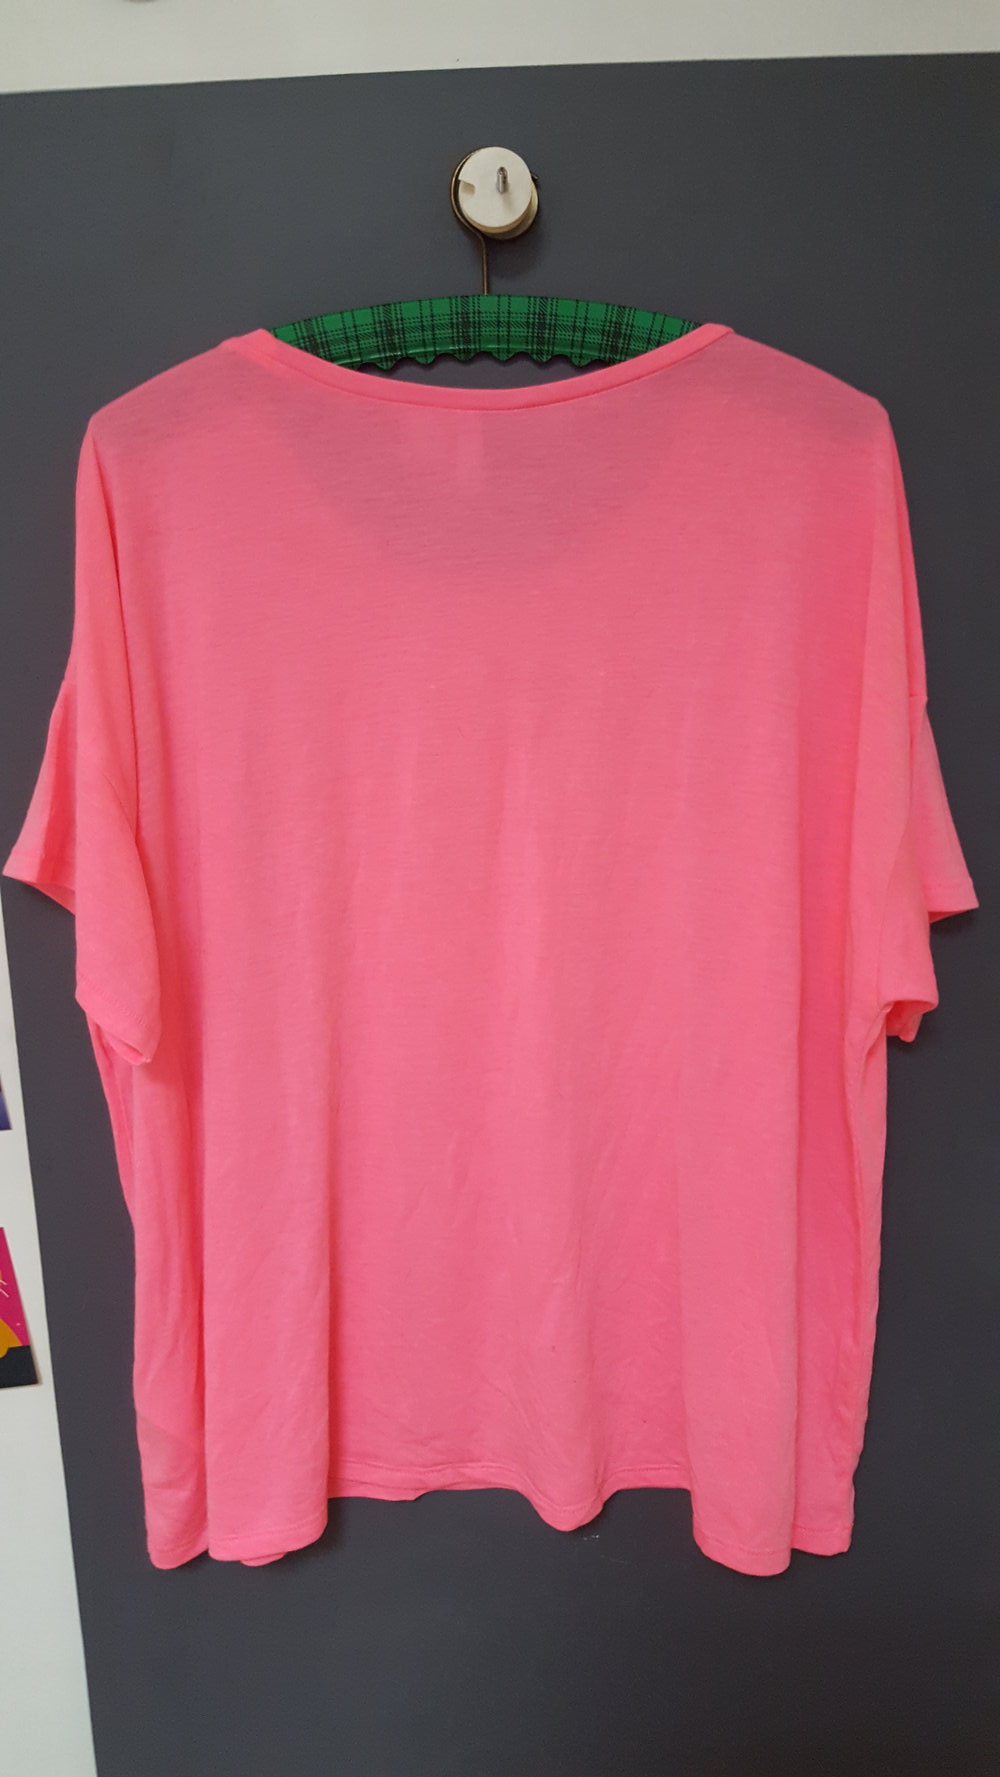 Oversize Shirt in Neon Pink